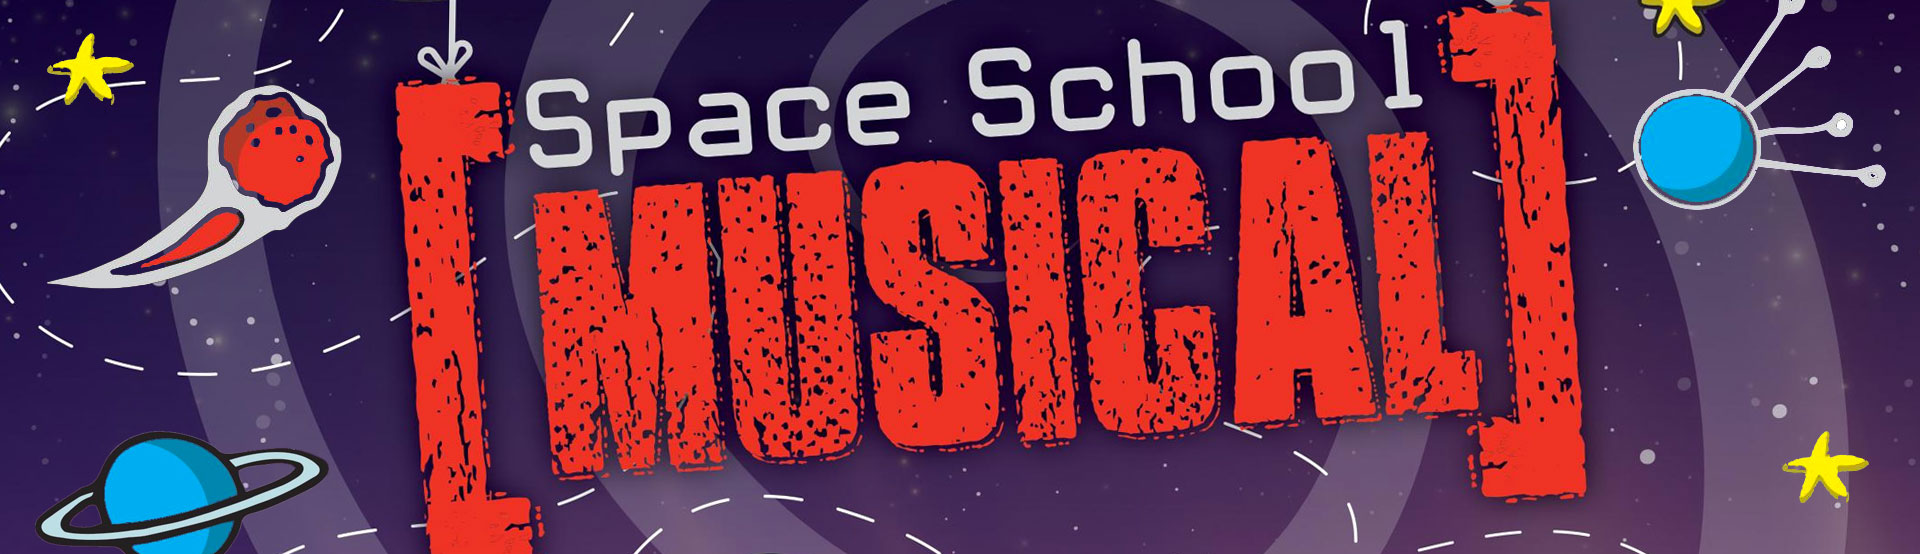 Space School Musical